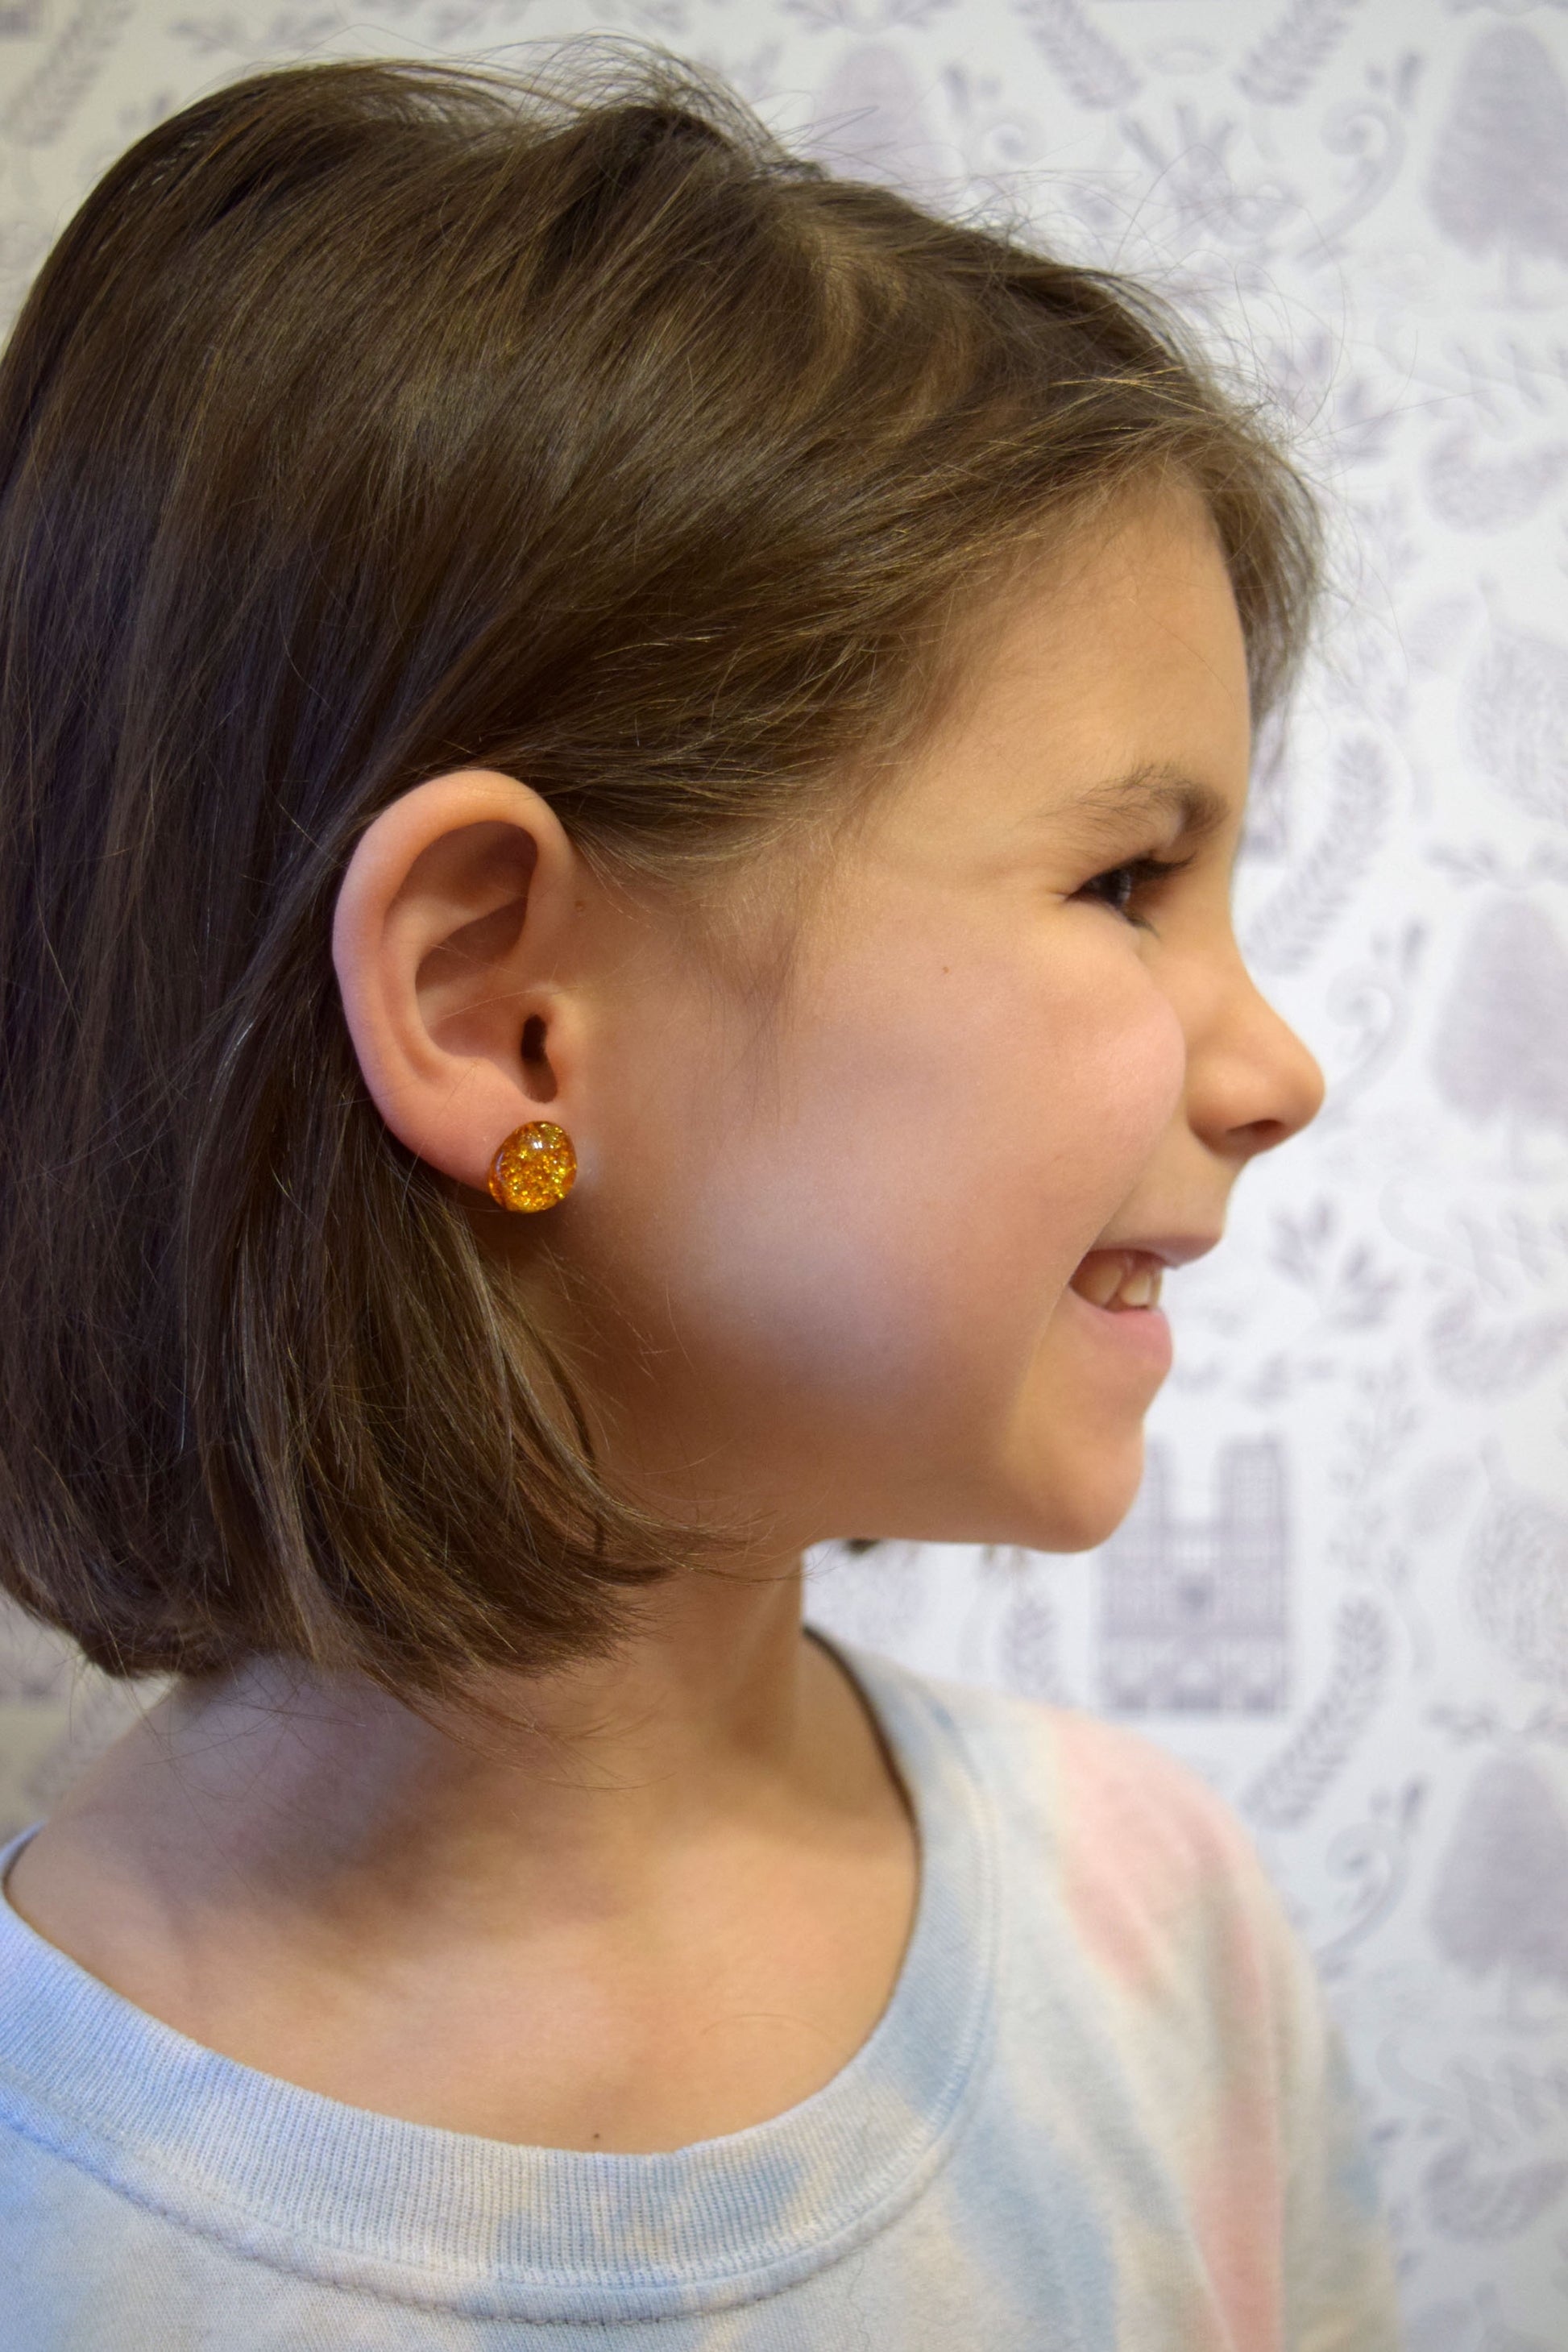 st ambrose earrings, saint earrings, honey drop earrings, earrings for girl, catholic earrings for girls, catholic saint earrings, bee earrings